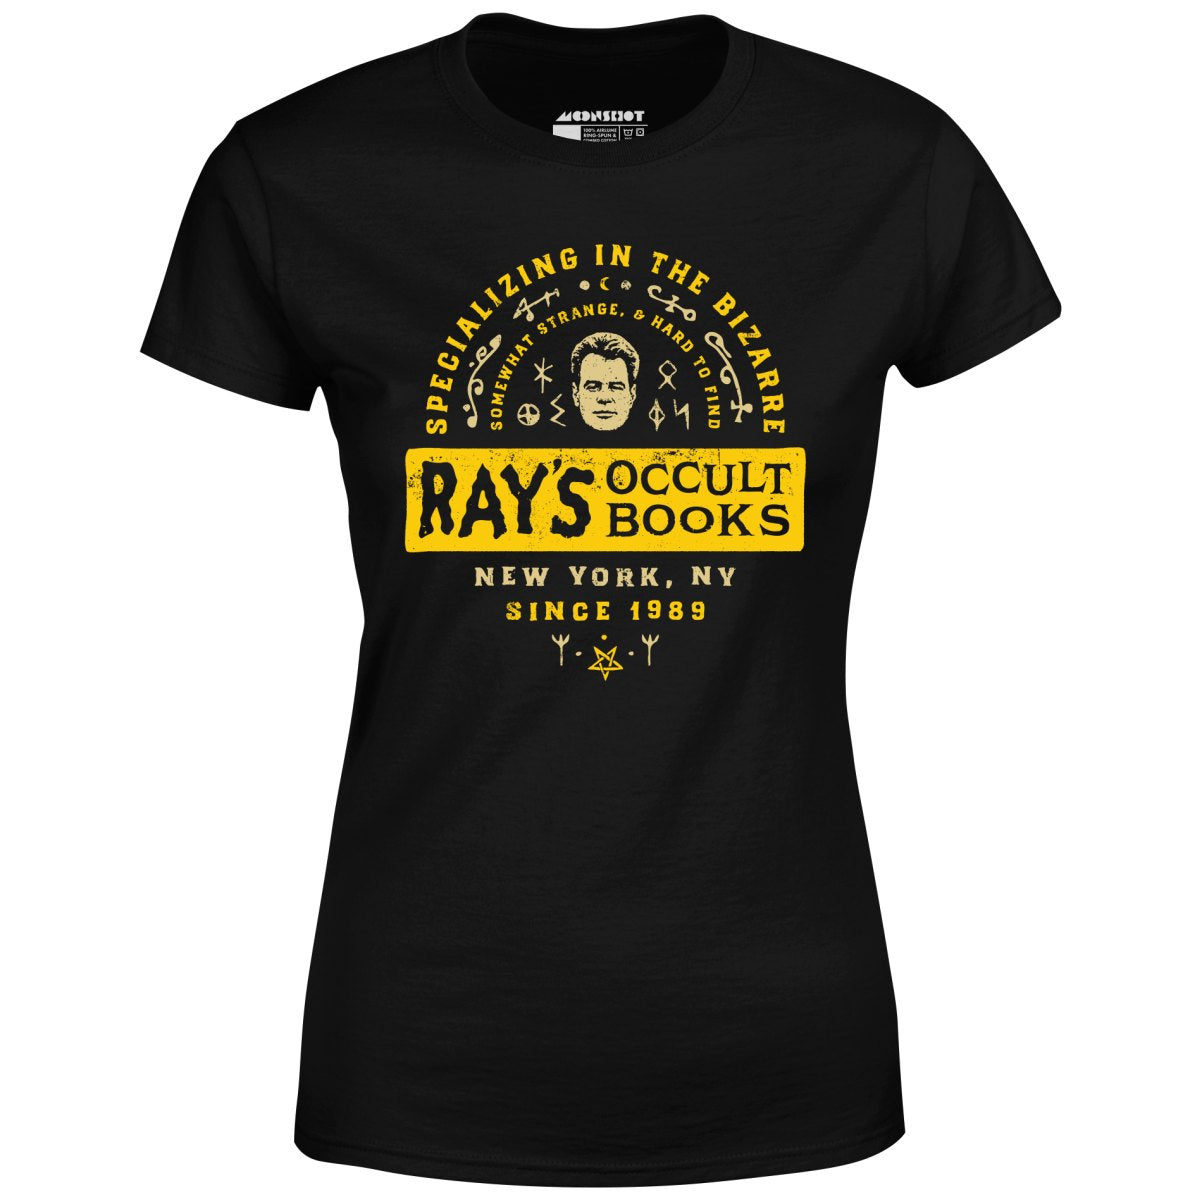 Ray's Occult Books - Women's T-Shirt